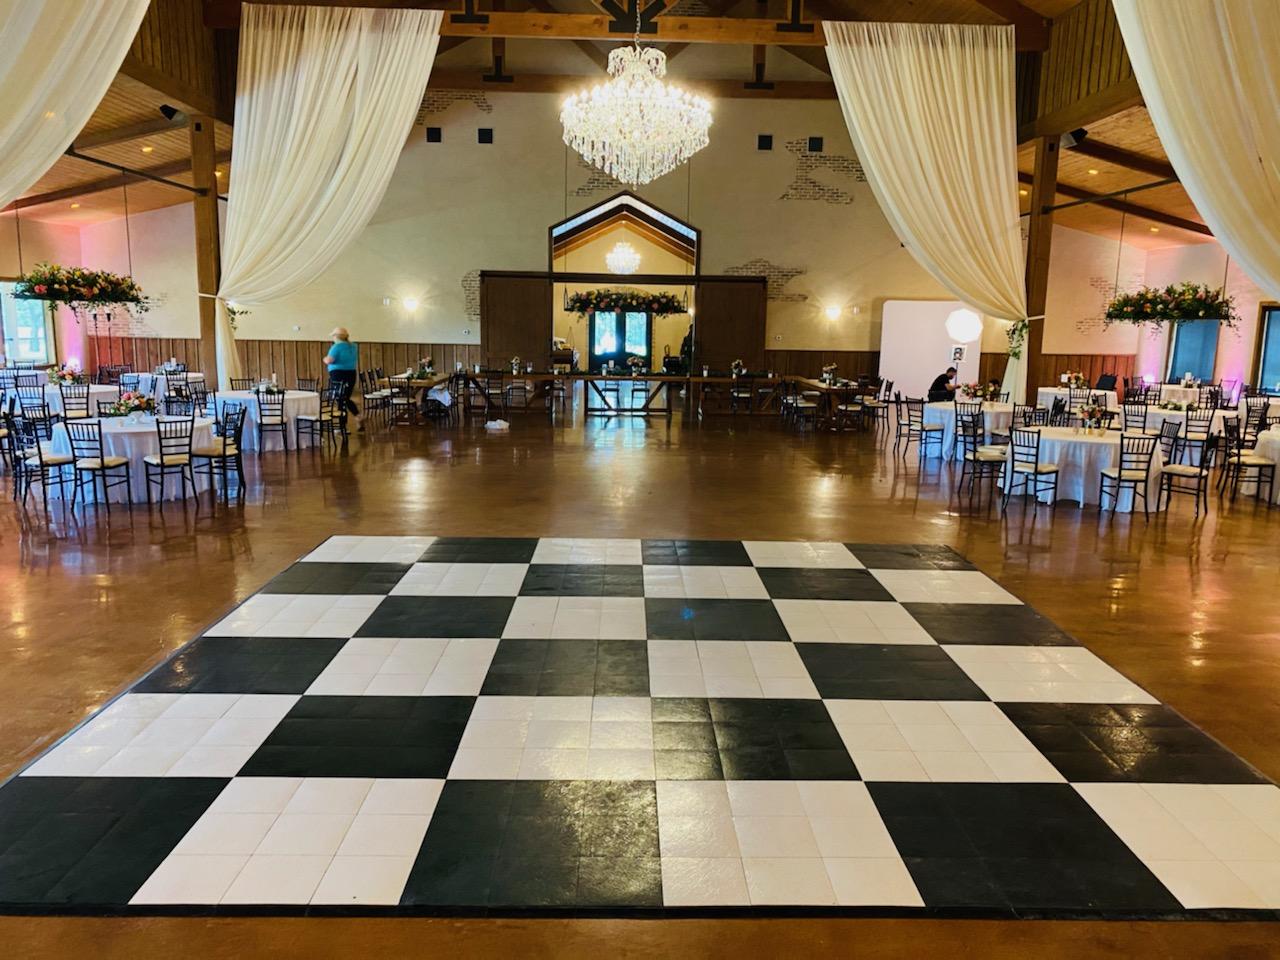 Dance Floor - White and Black Checkered 18'x18' b